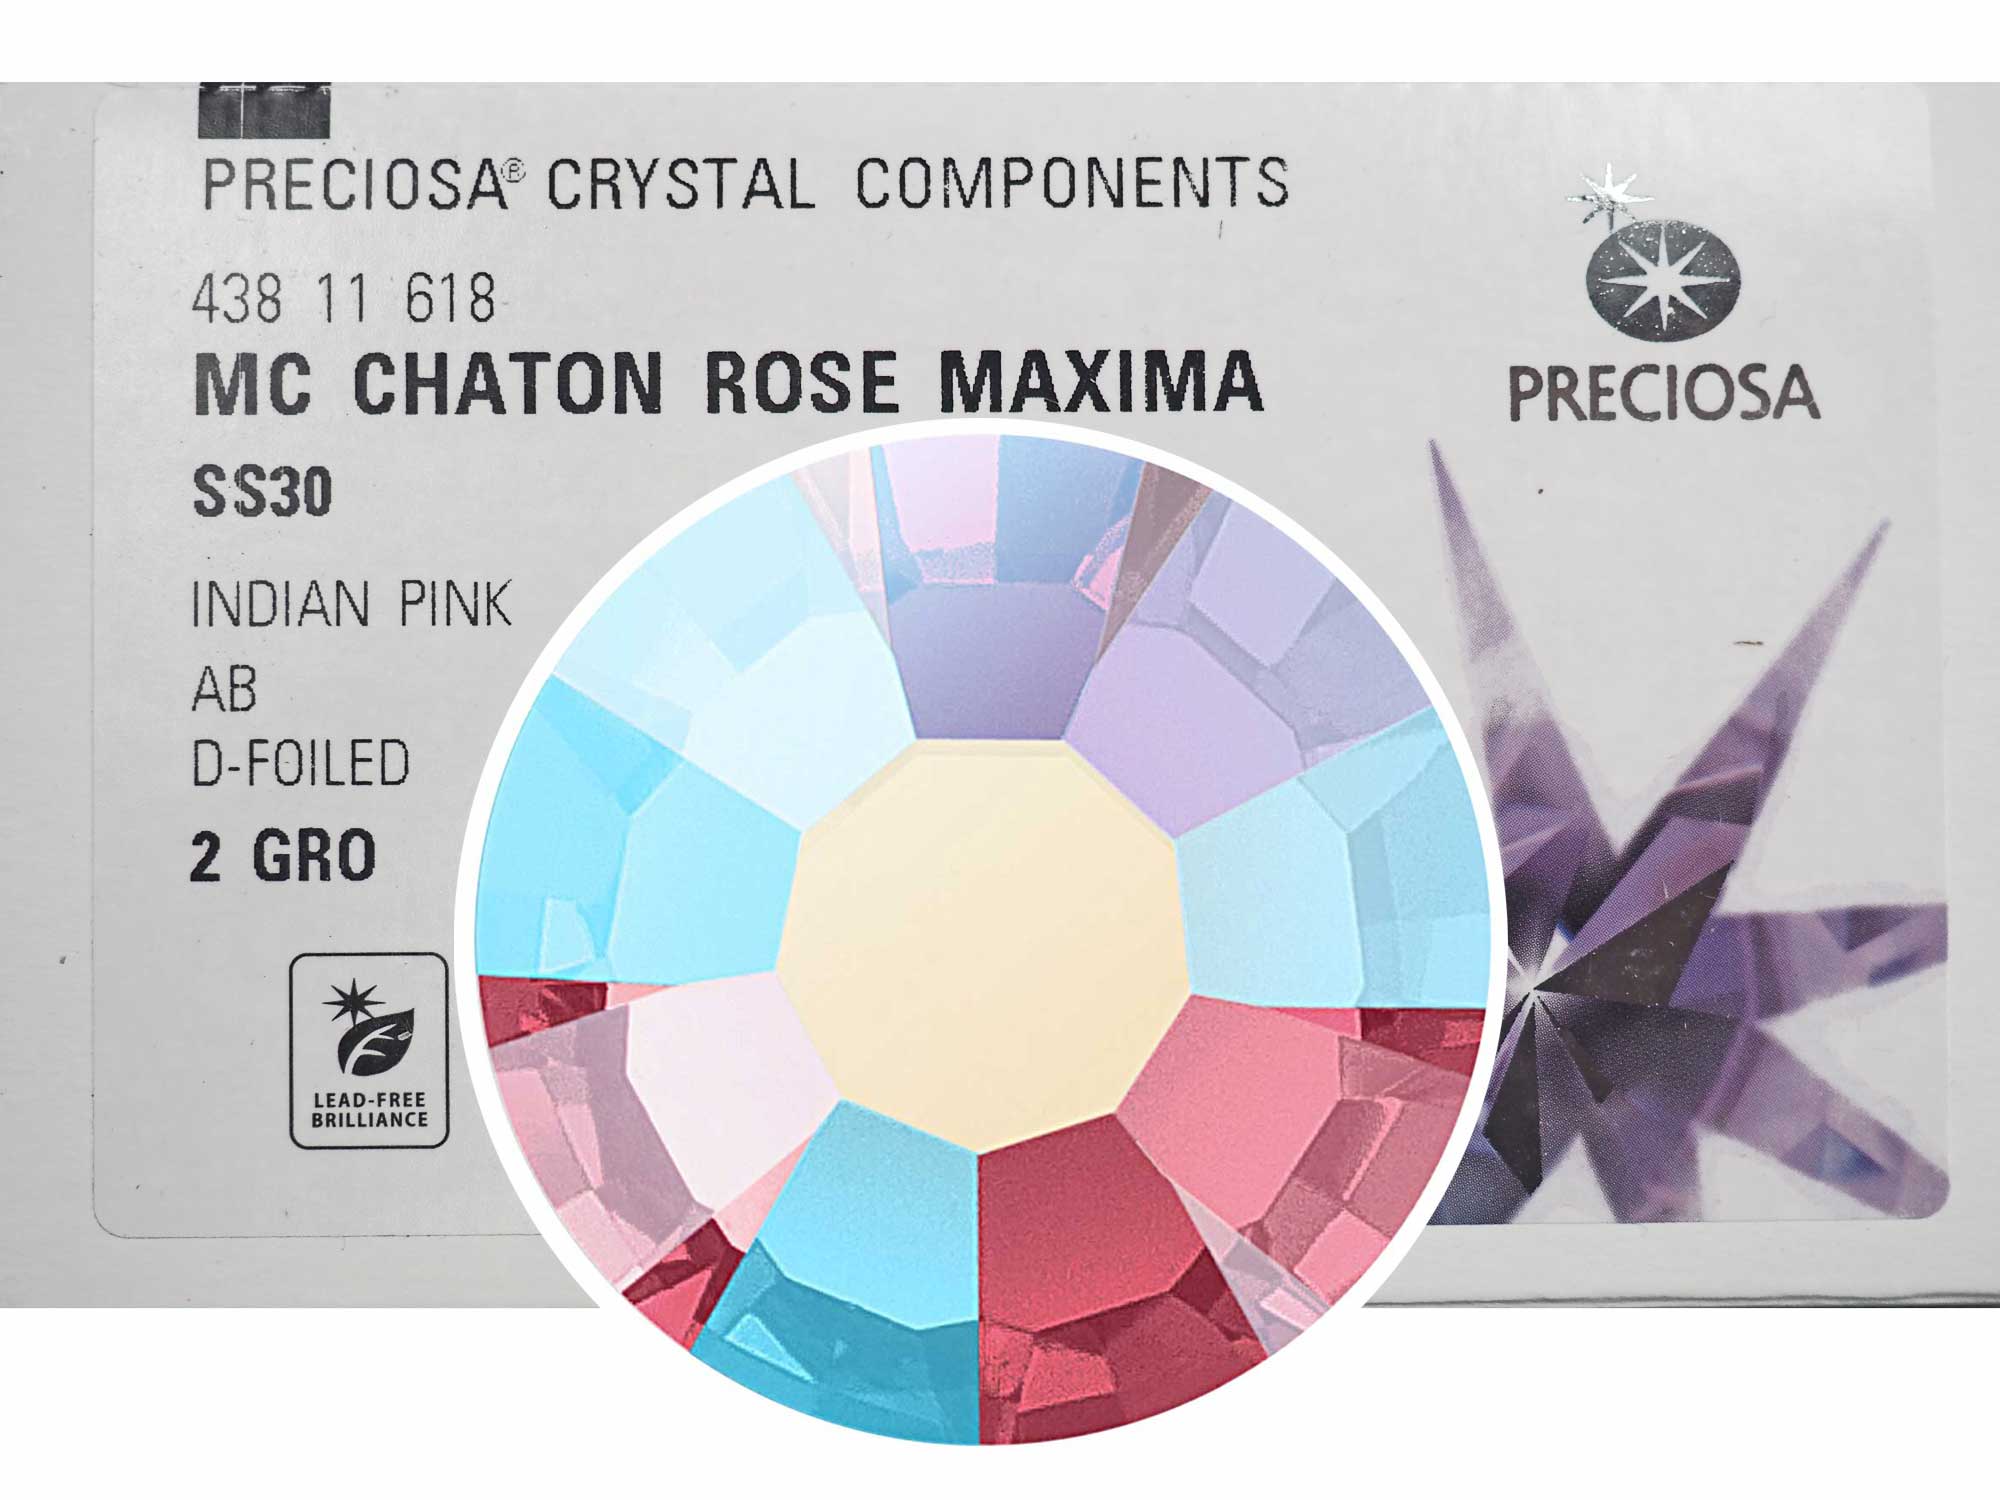 Indian Pink AB, Preciosa VIVA or MAXIMA Chaton Roses (Rhinestone Flatbacks), Genuine Czech Crystals, rose red coated with Aurora Borealis